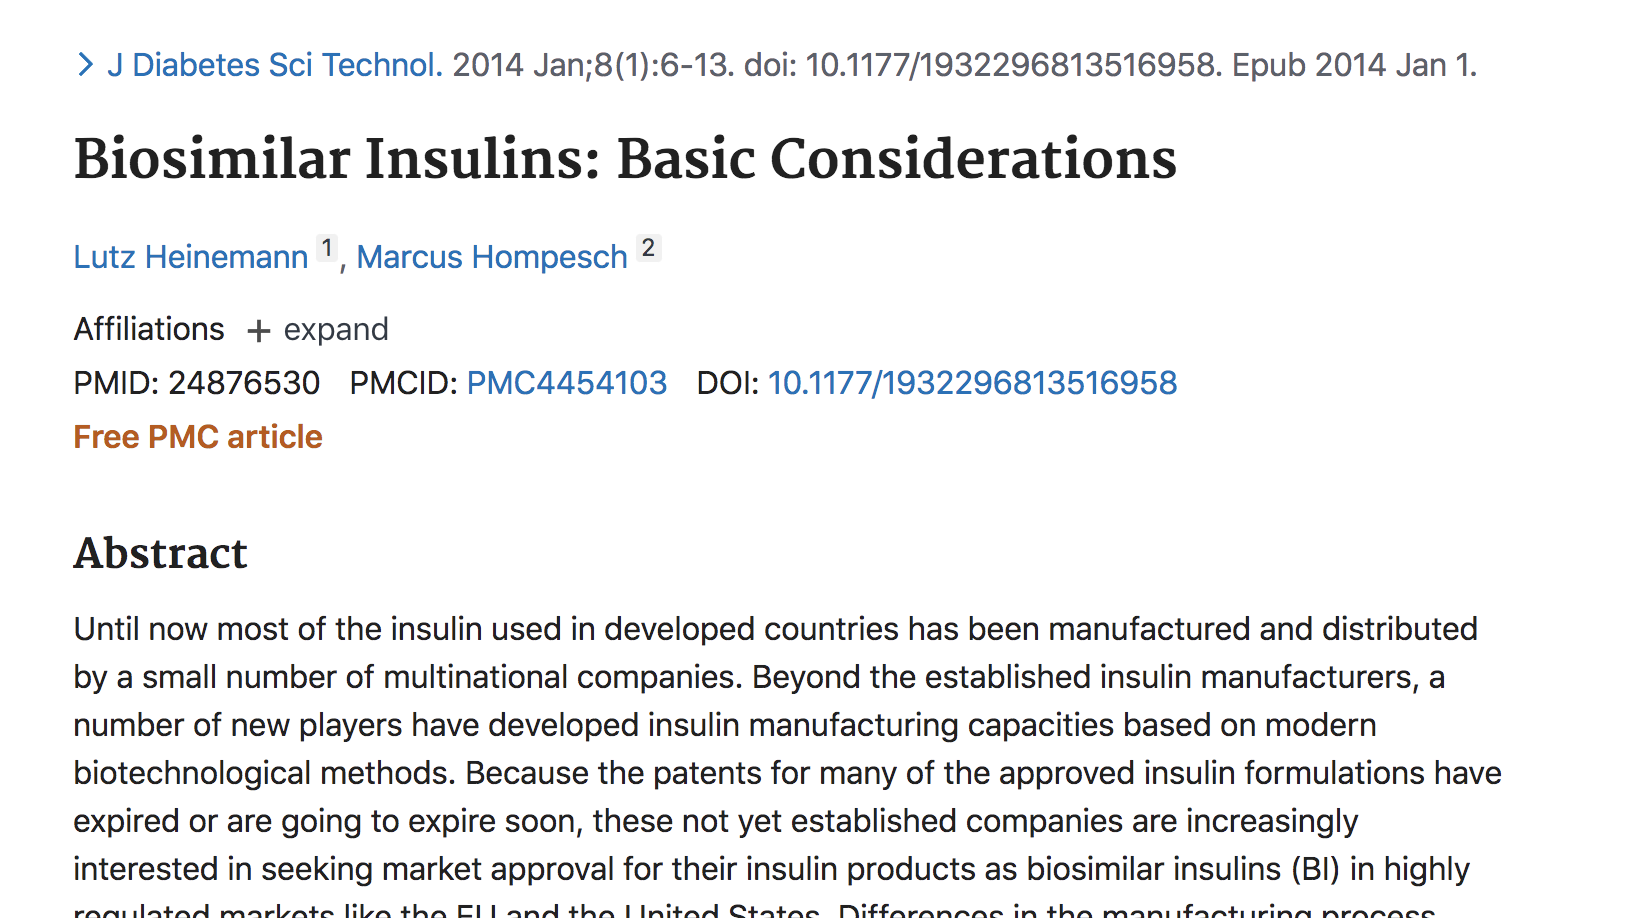 image of Biosimilar Insulins: Basic Considerations.